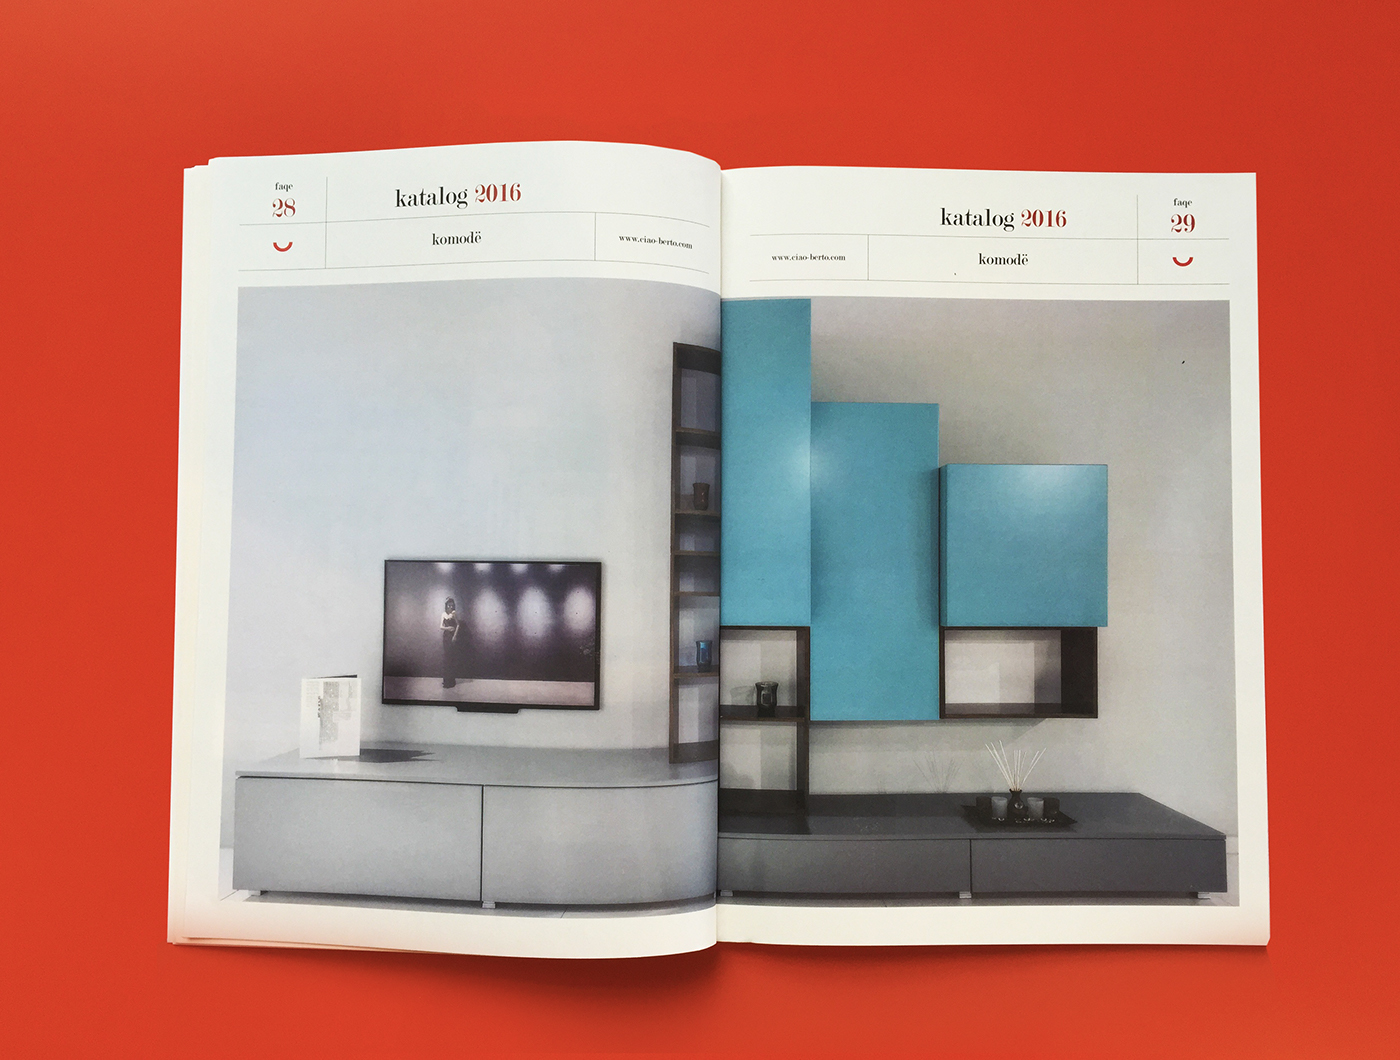 Layout concept visual designlayout kitchen furniture design inspire